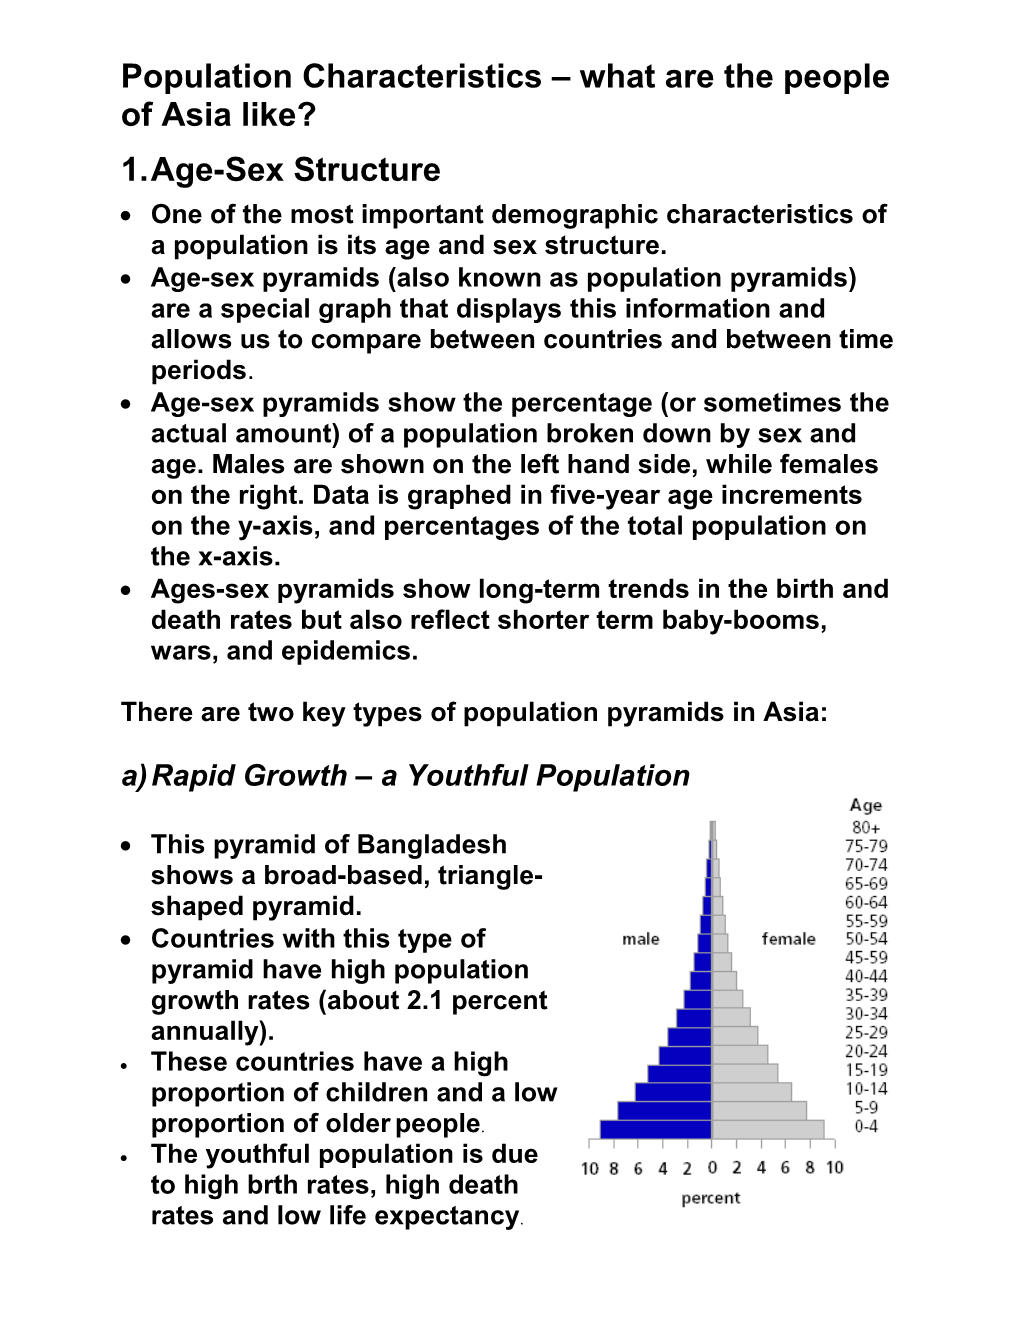 Age-Sex Pyramids